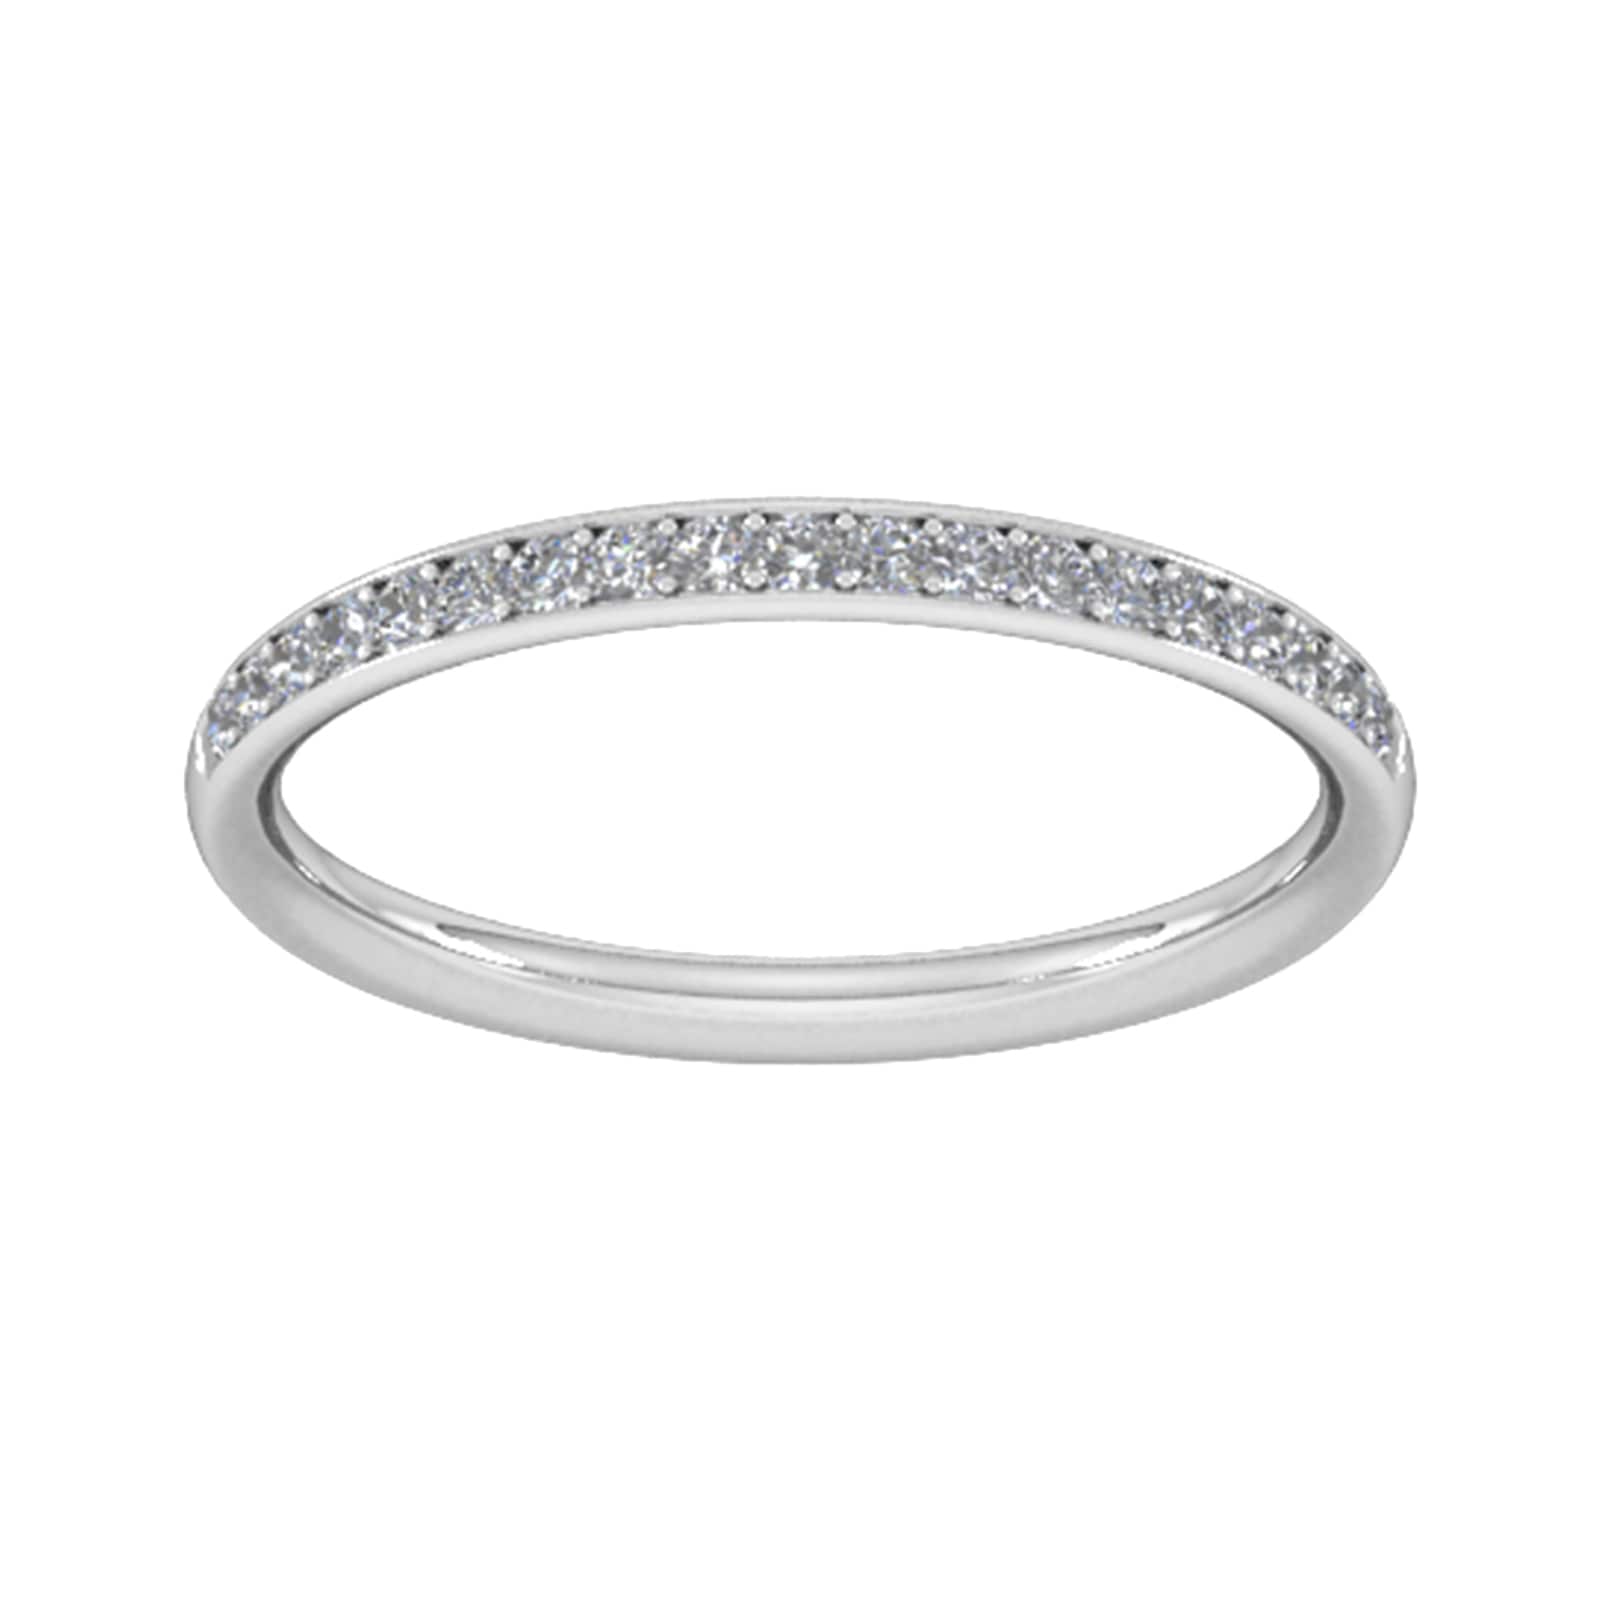 0.18 Carat Total Weight Brilliant Cut Grain Set Diamond Wedding Ring In Platinum - Ring Size U